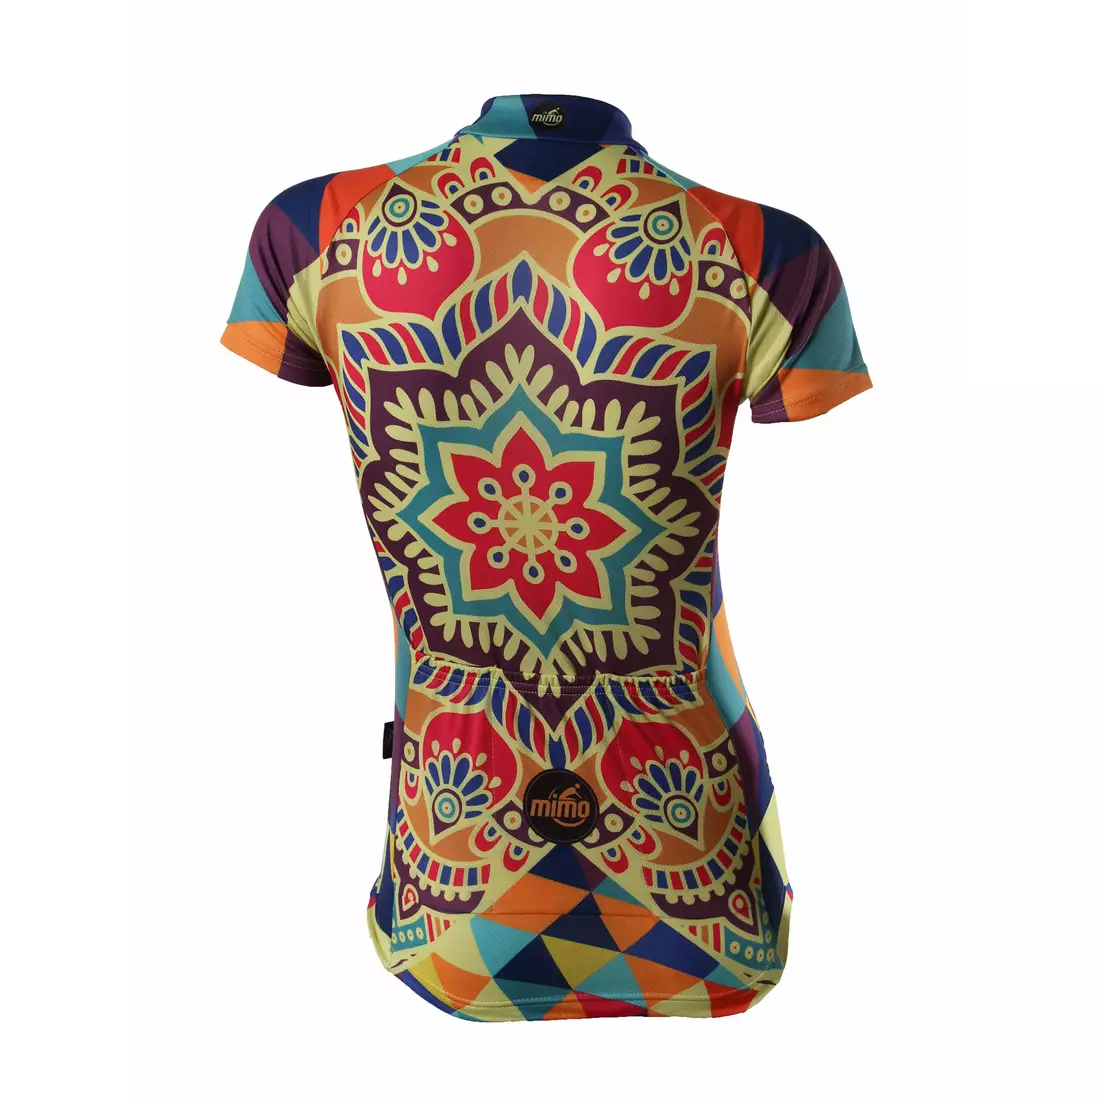 MikeSPORT DESIGN MOSAIC women's cycling jersey